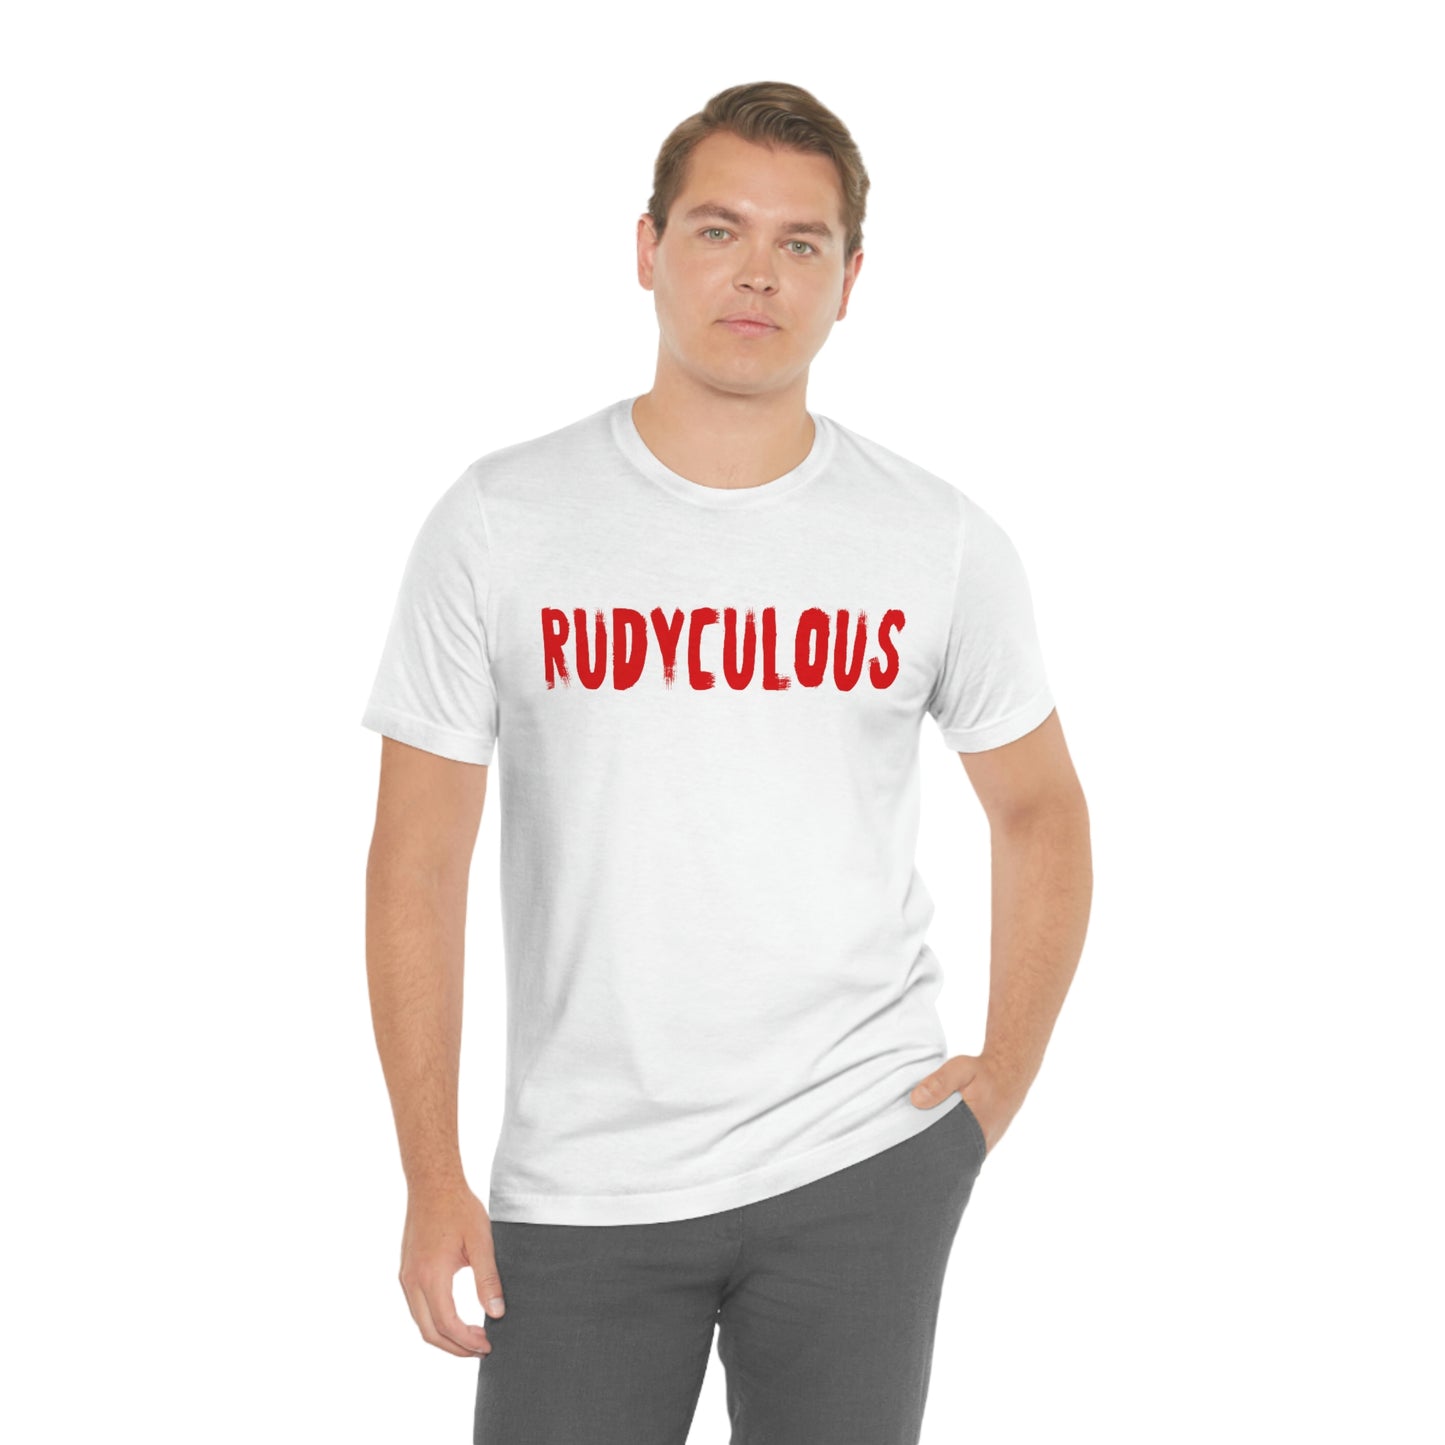 Rudyculous Unisex Short Sleeve Tee